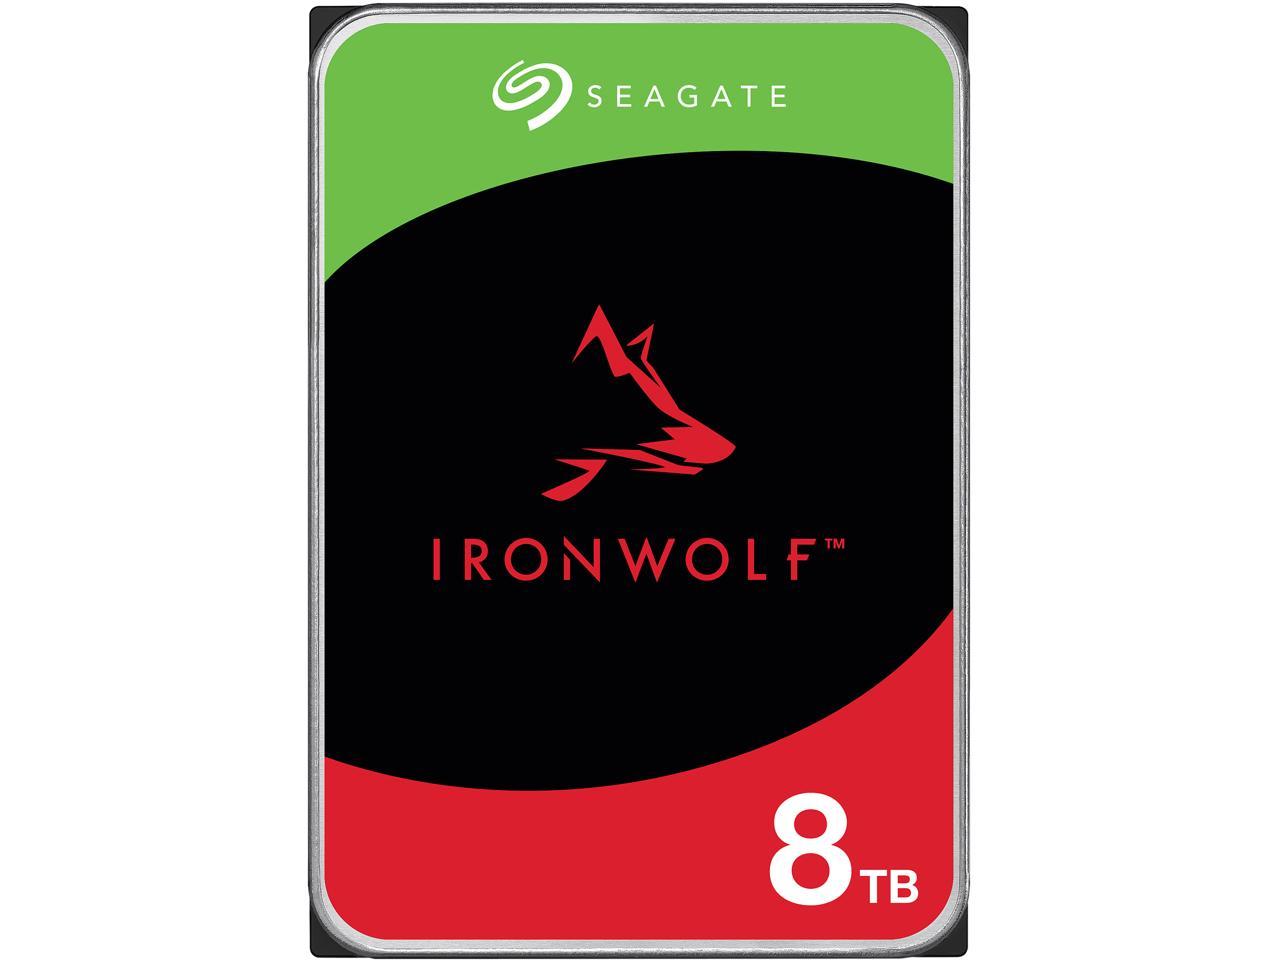 8TB Seagate IronWolf 3.5" SATA NAS Internal Hard Drive $140 + Free Shipping